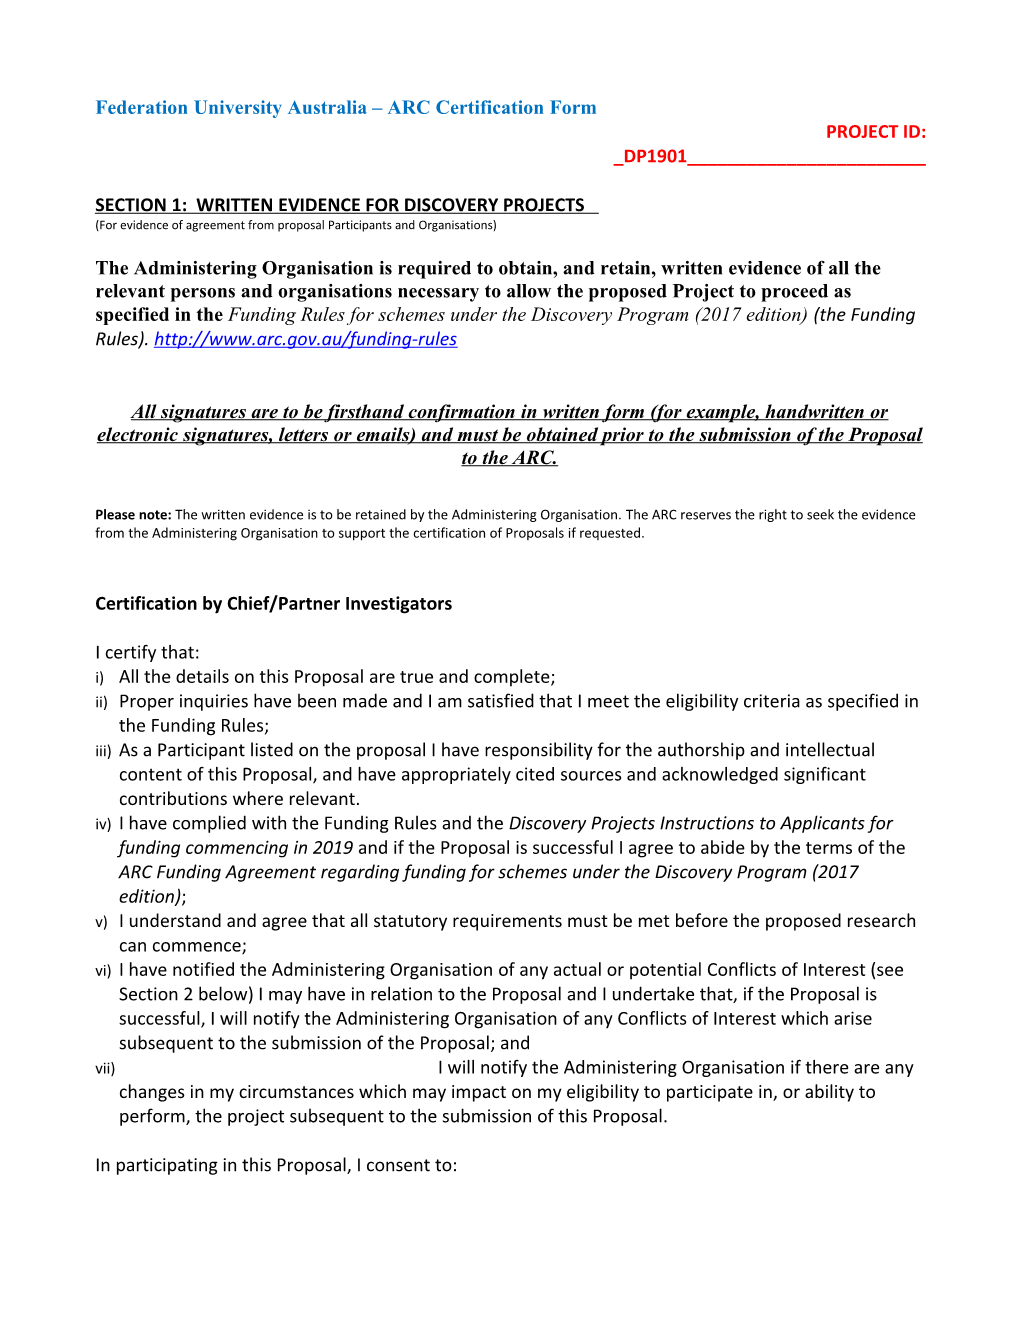 Federation University Australia ARC Certification Form